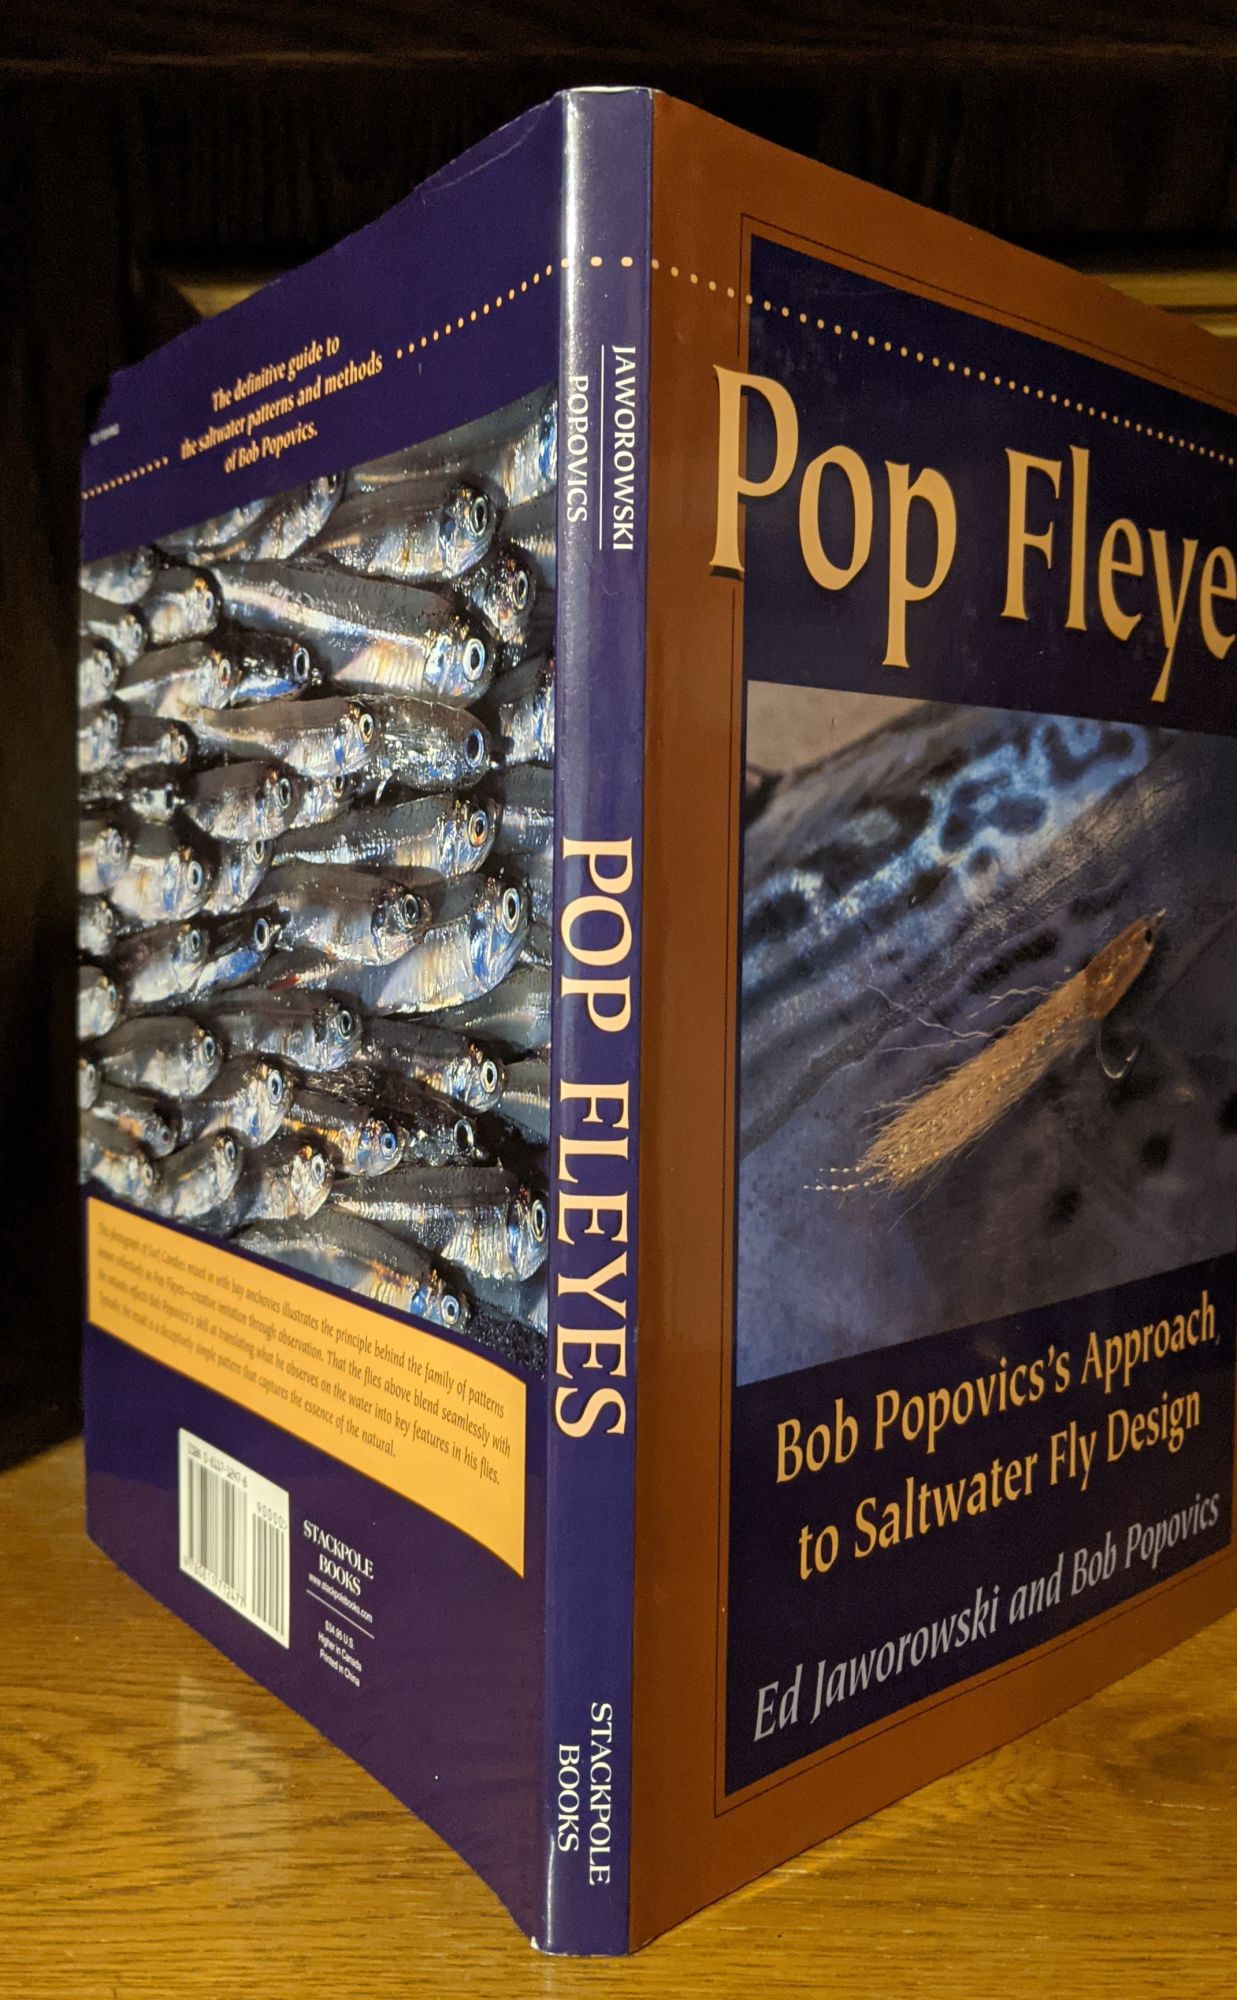 Pop Fleyes. Bob popovics's Approach to Saltwater Fly Design